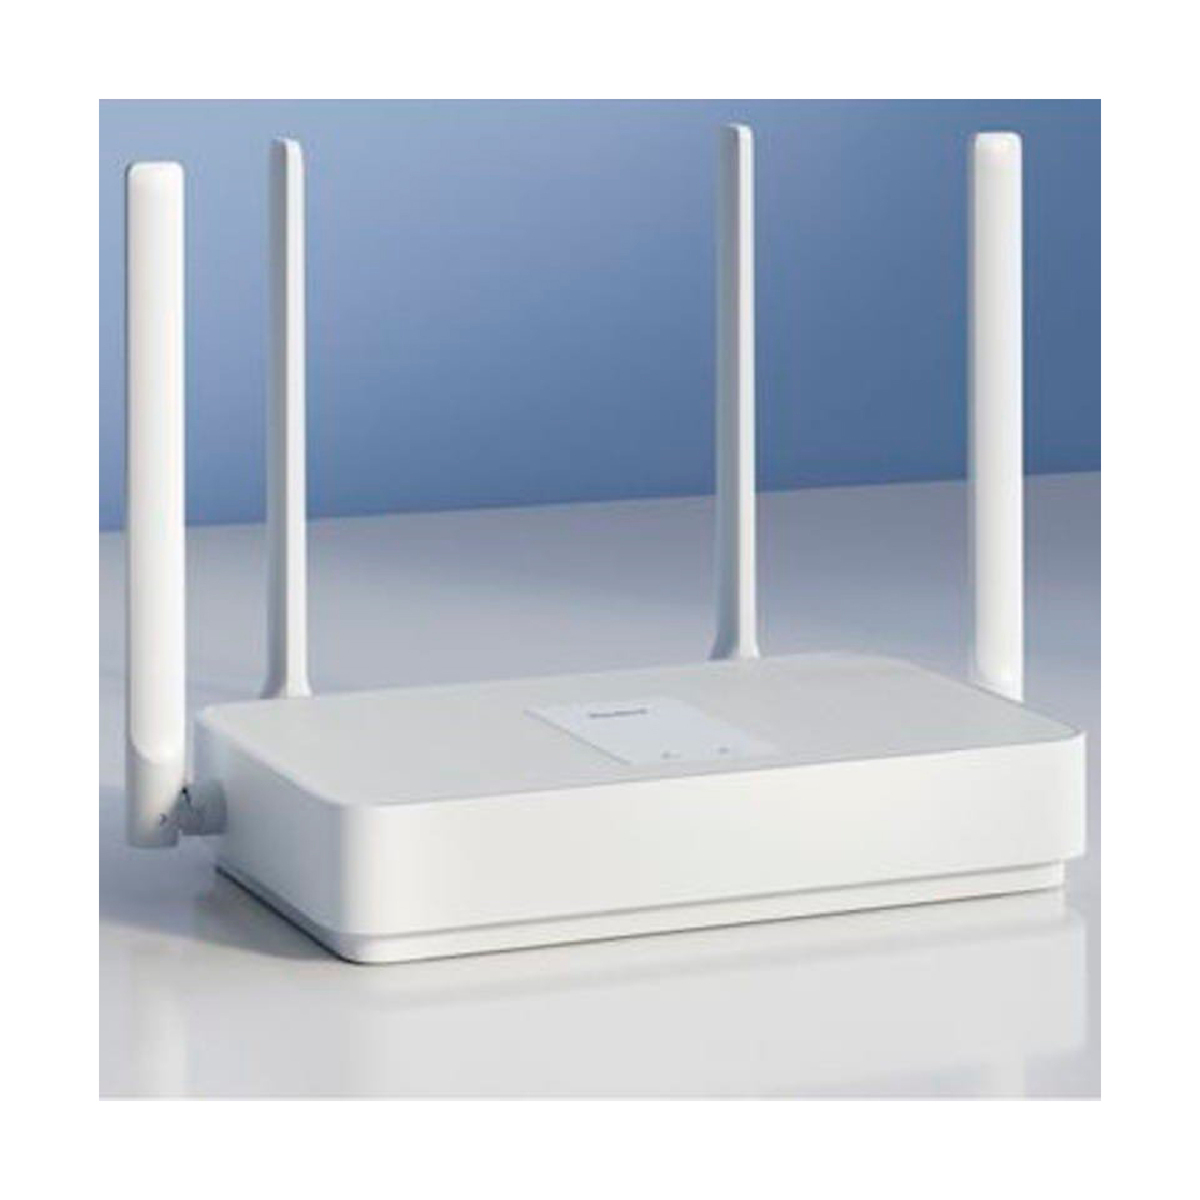 Mi Wireless Router AX1800